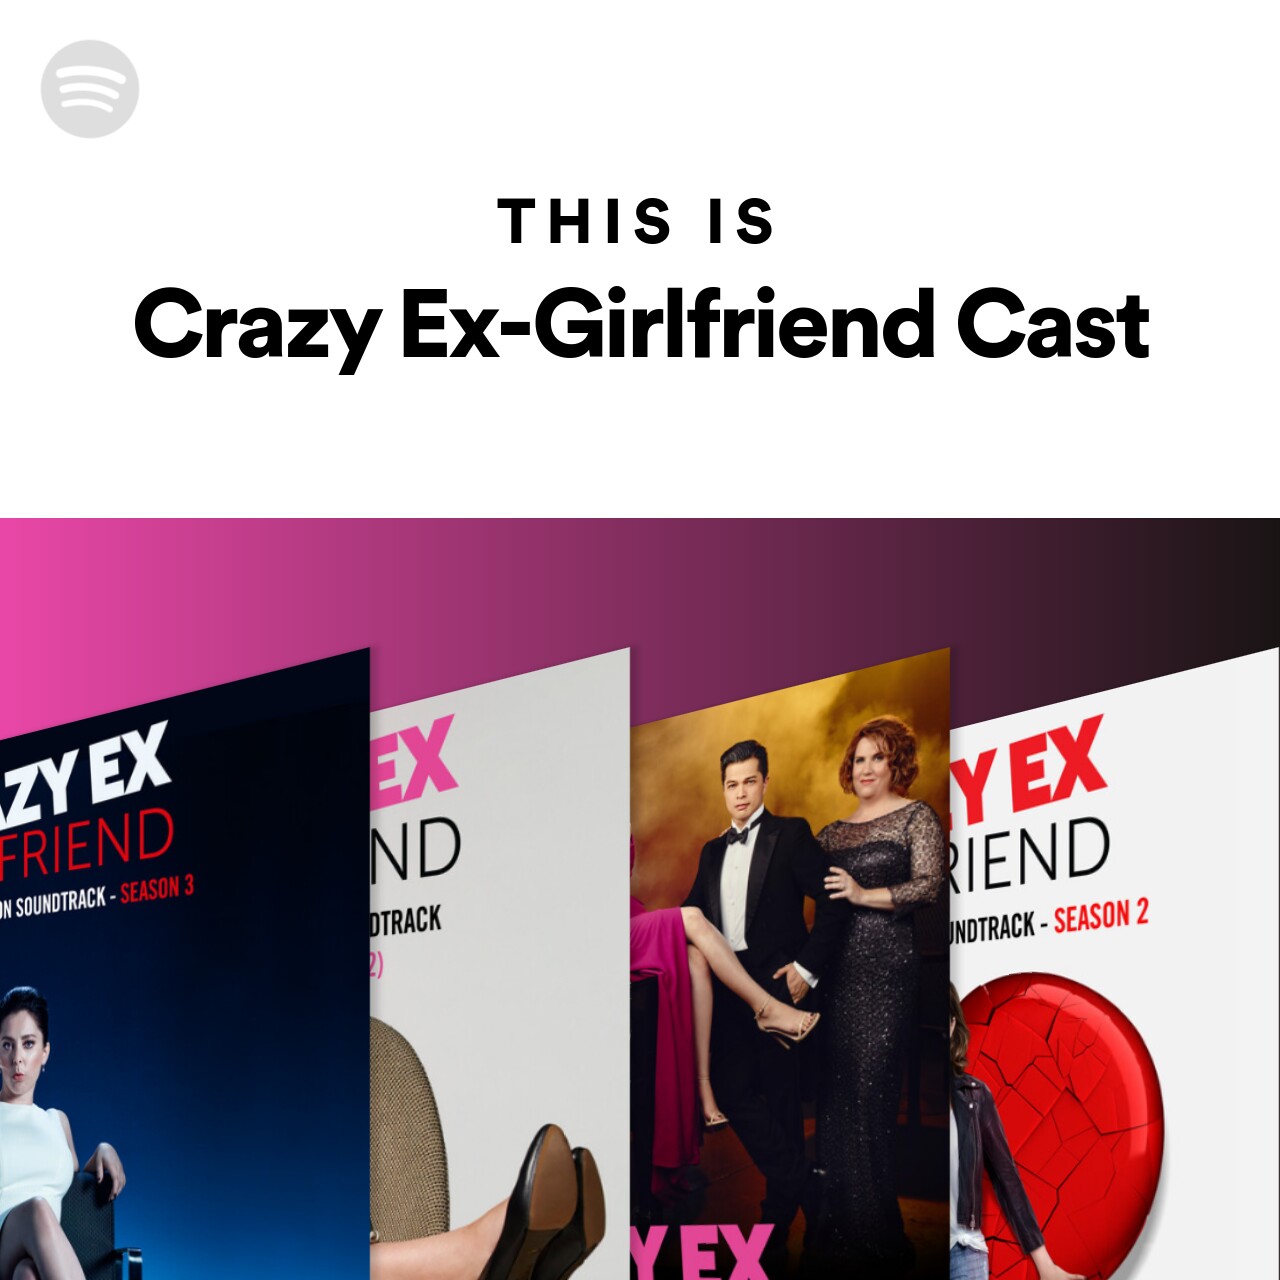 This Is Crazy Ex-Girlfriend Cast